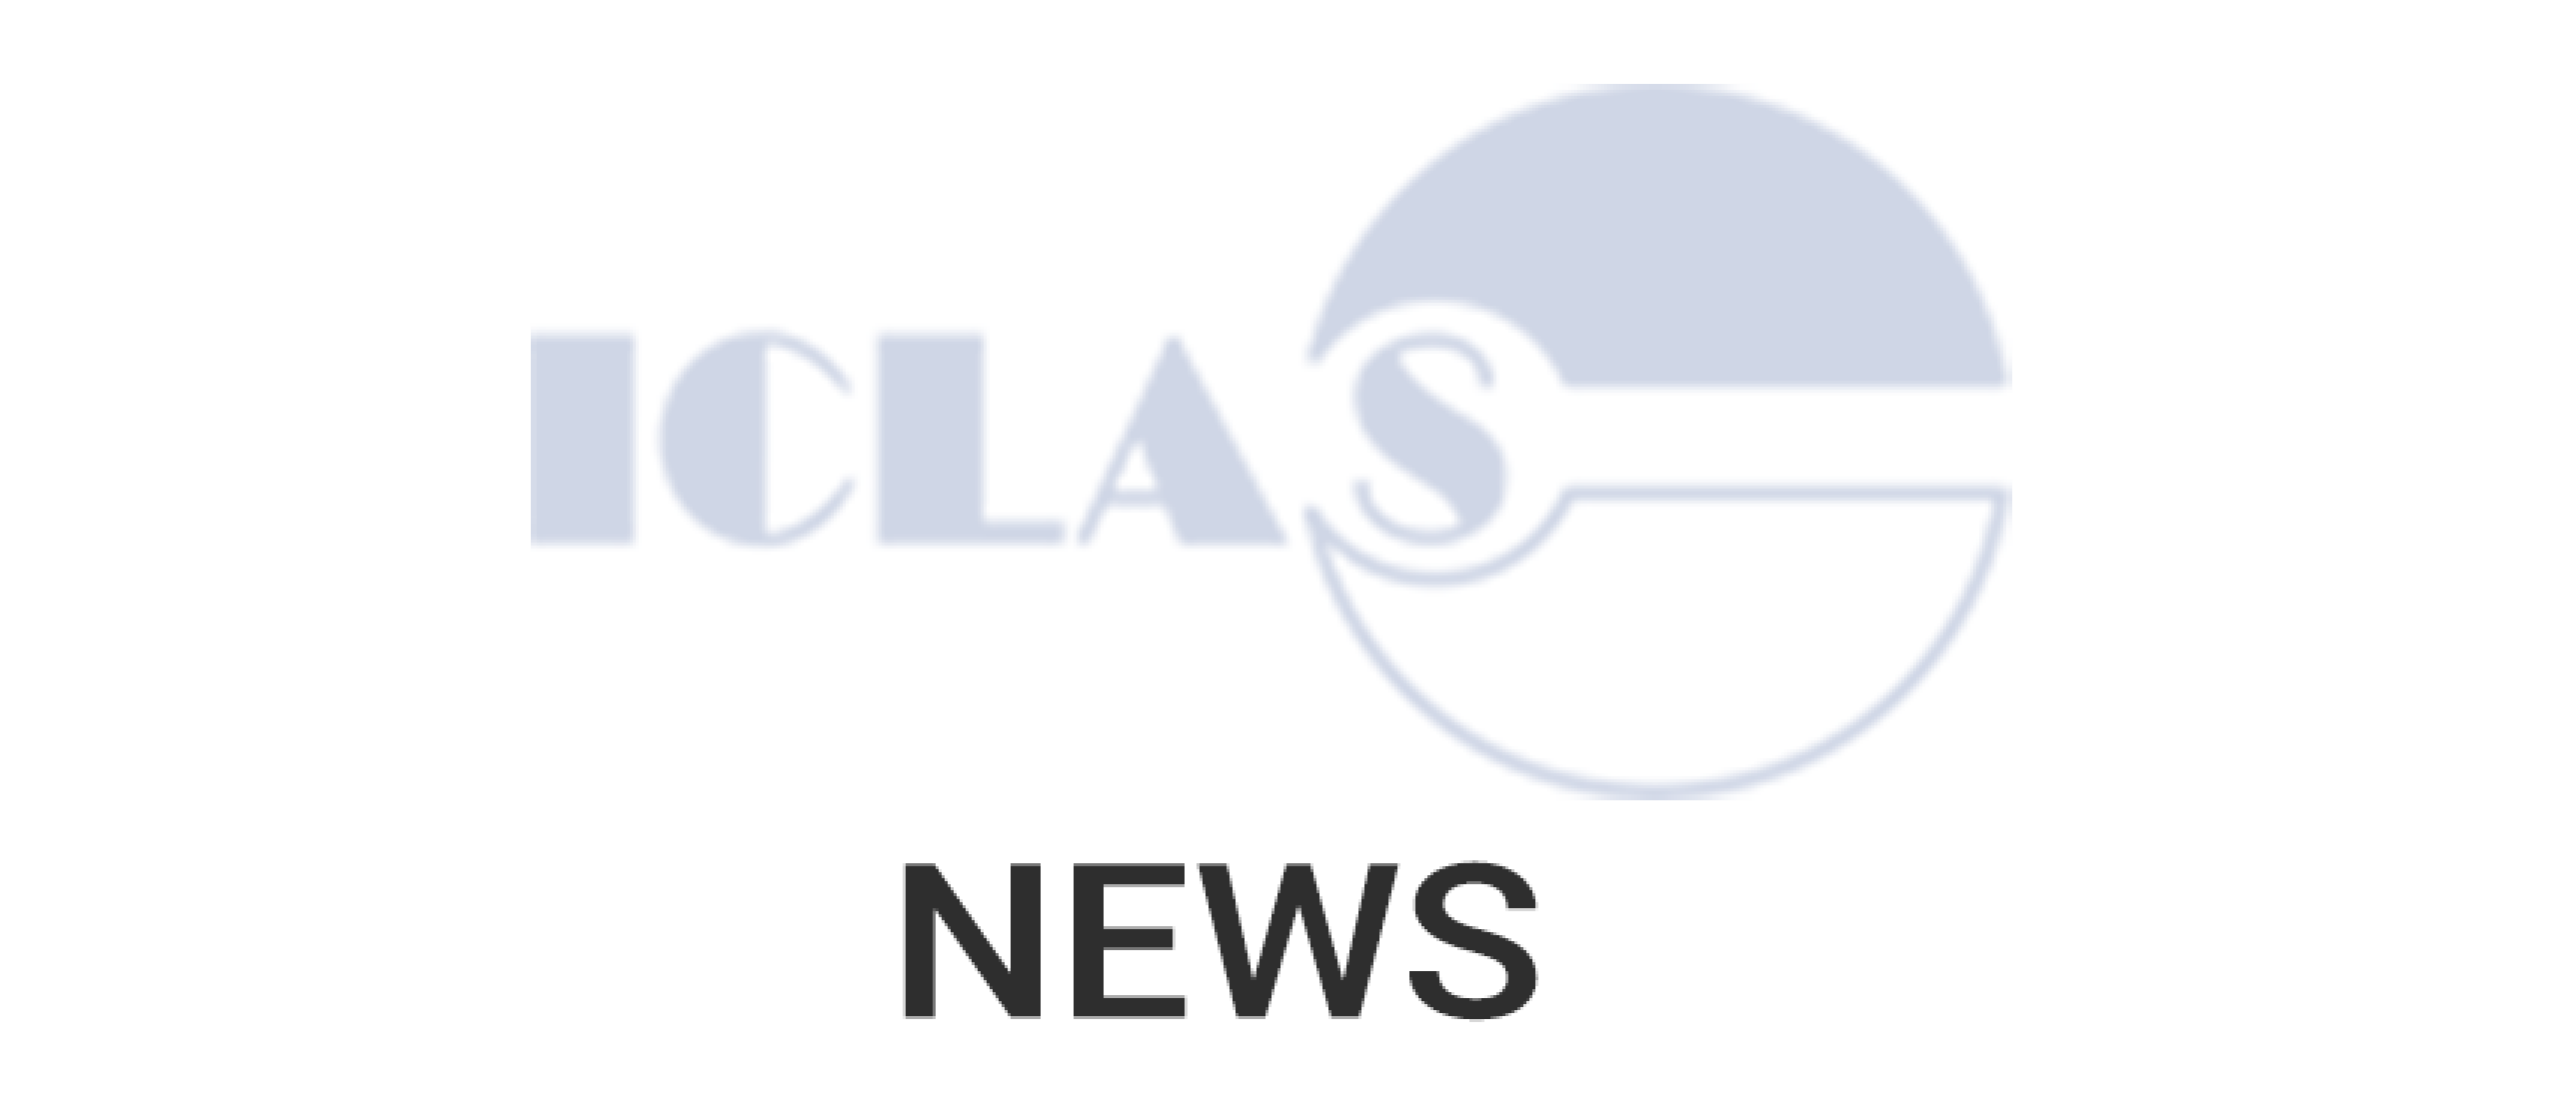 ICLAS News February 2023